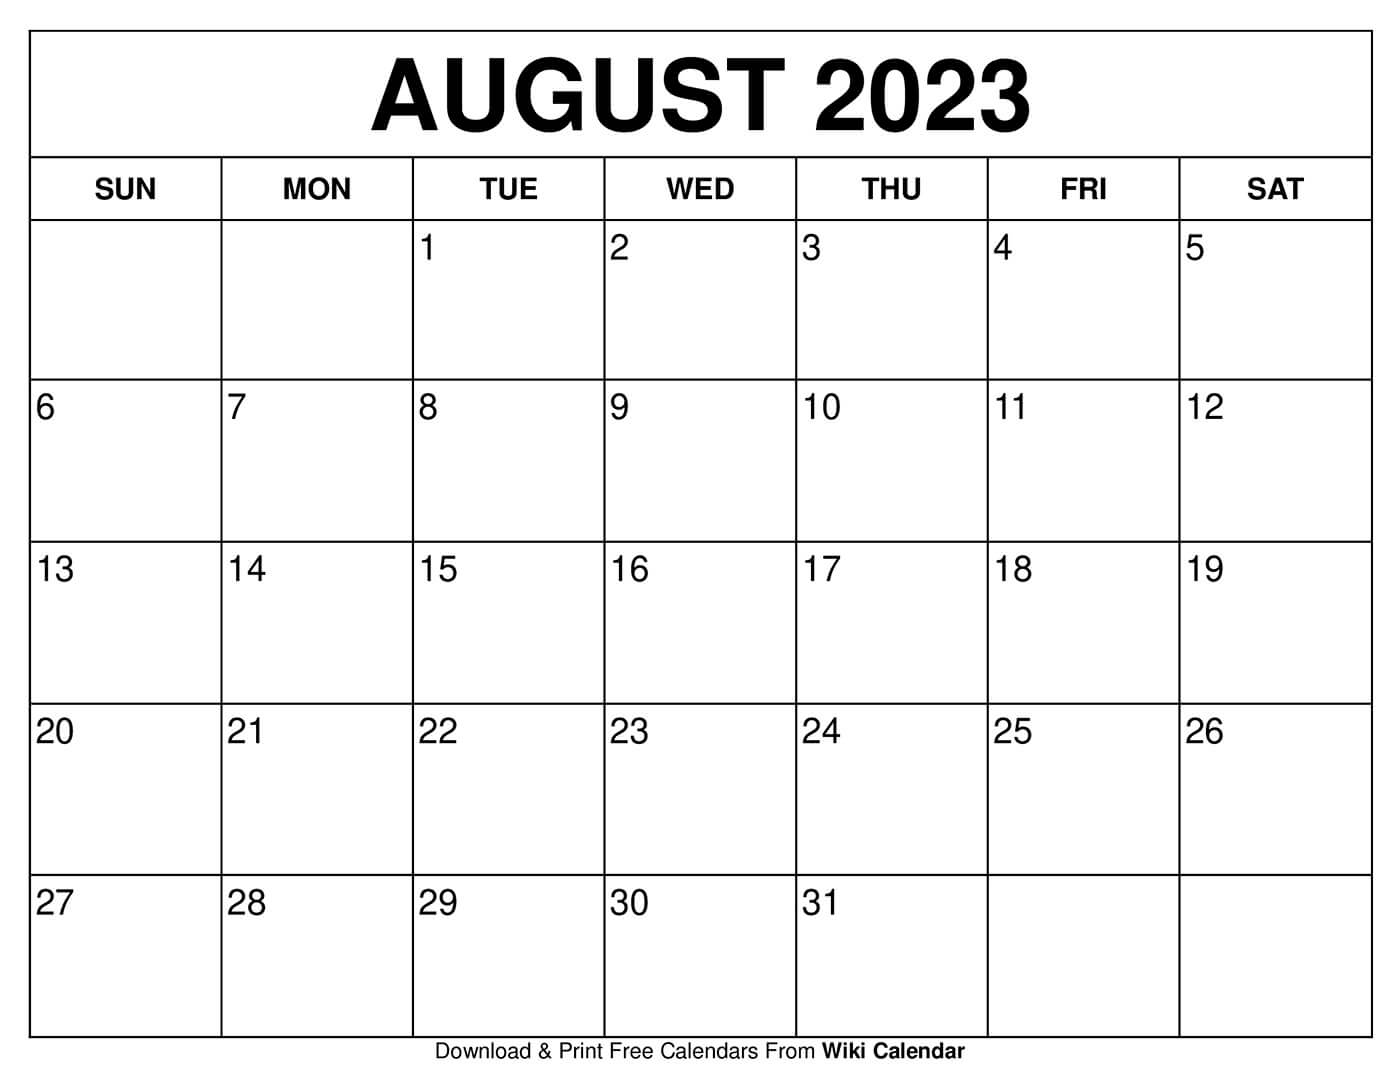 National Day Calendar August 2022 Free Printable August 2022 Calendars - Wiki Calendar